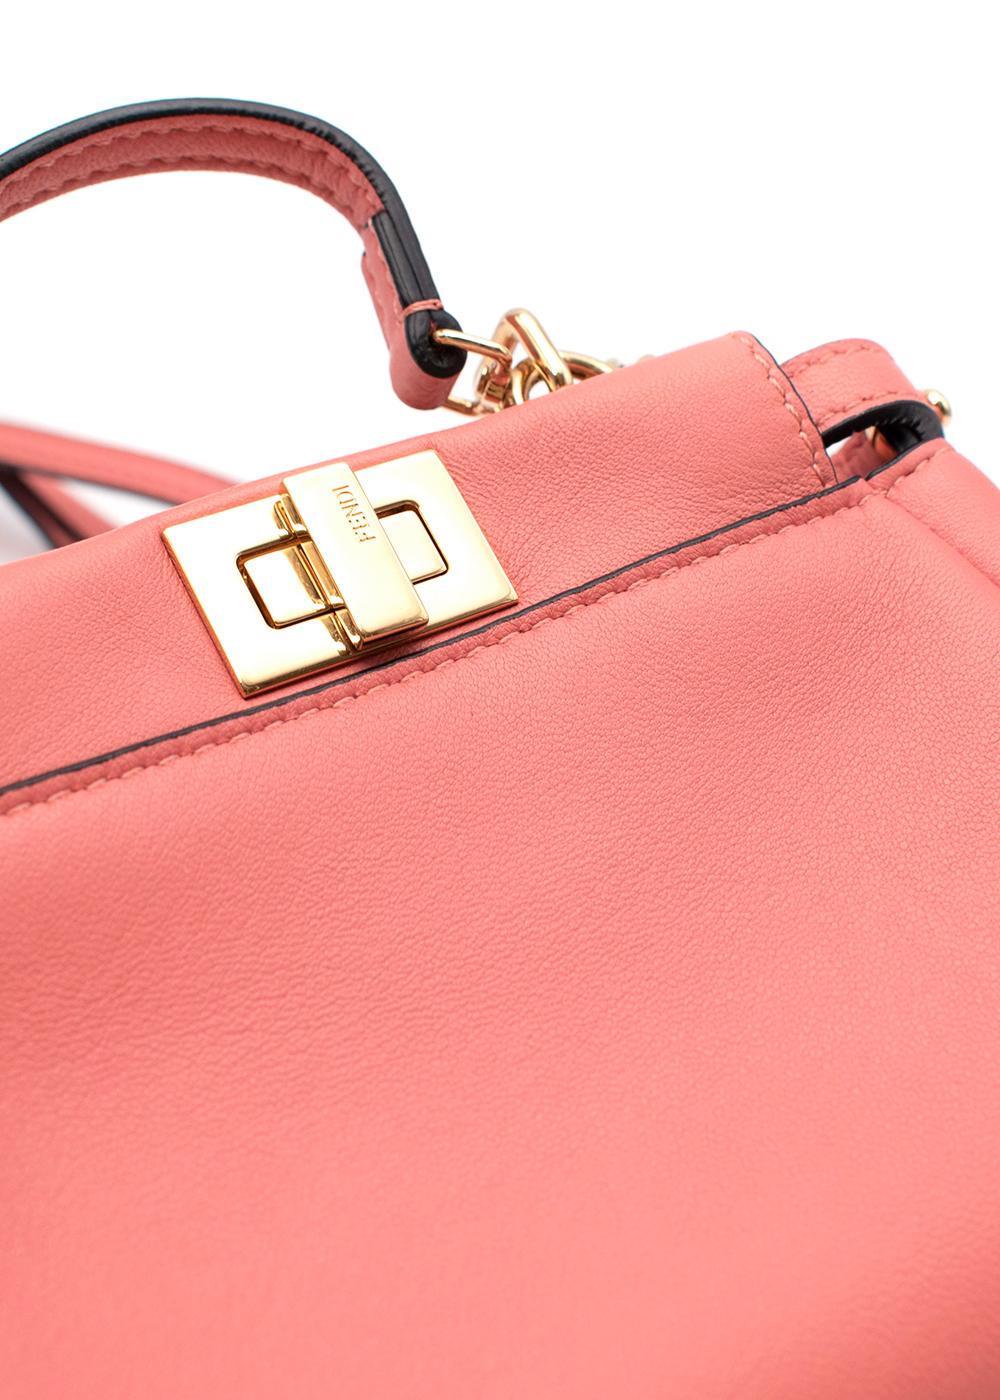 Women's Fendi Coral-Pink Leather Mini Pocket Peekaboo Bag